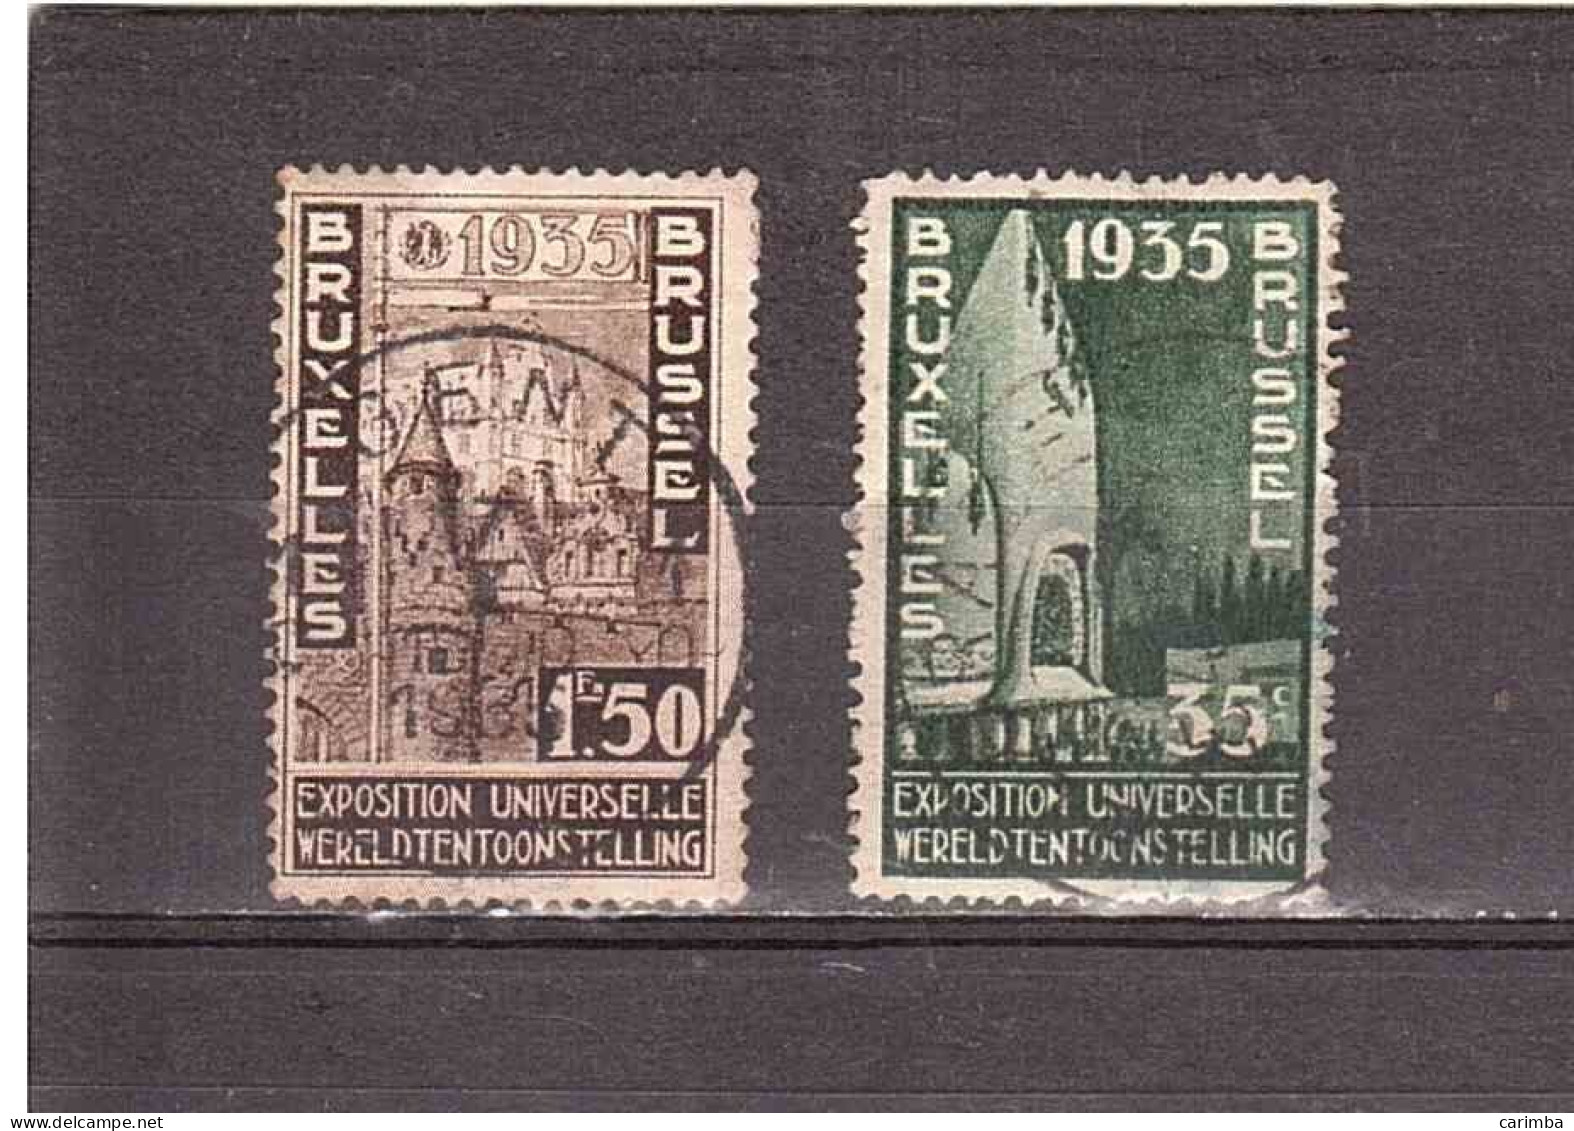 BELGIO 1935 BRUXELLES EXPOSITION UNIVERSELLE - 1935 – Bruselas (Bélgica)